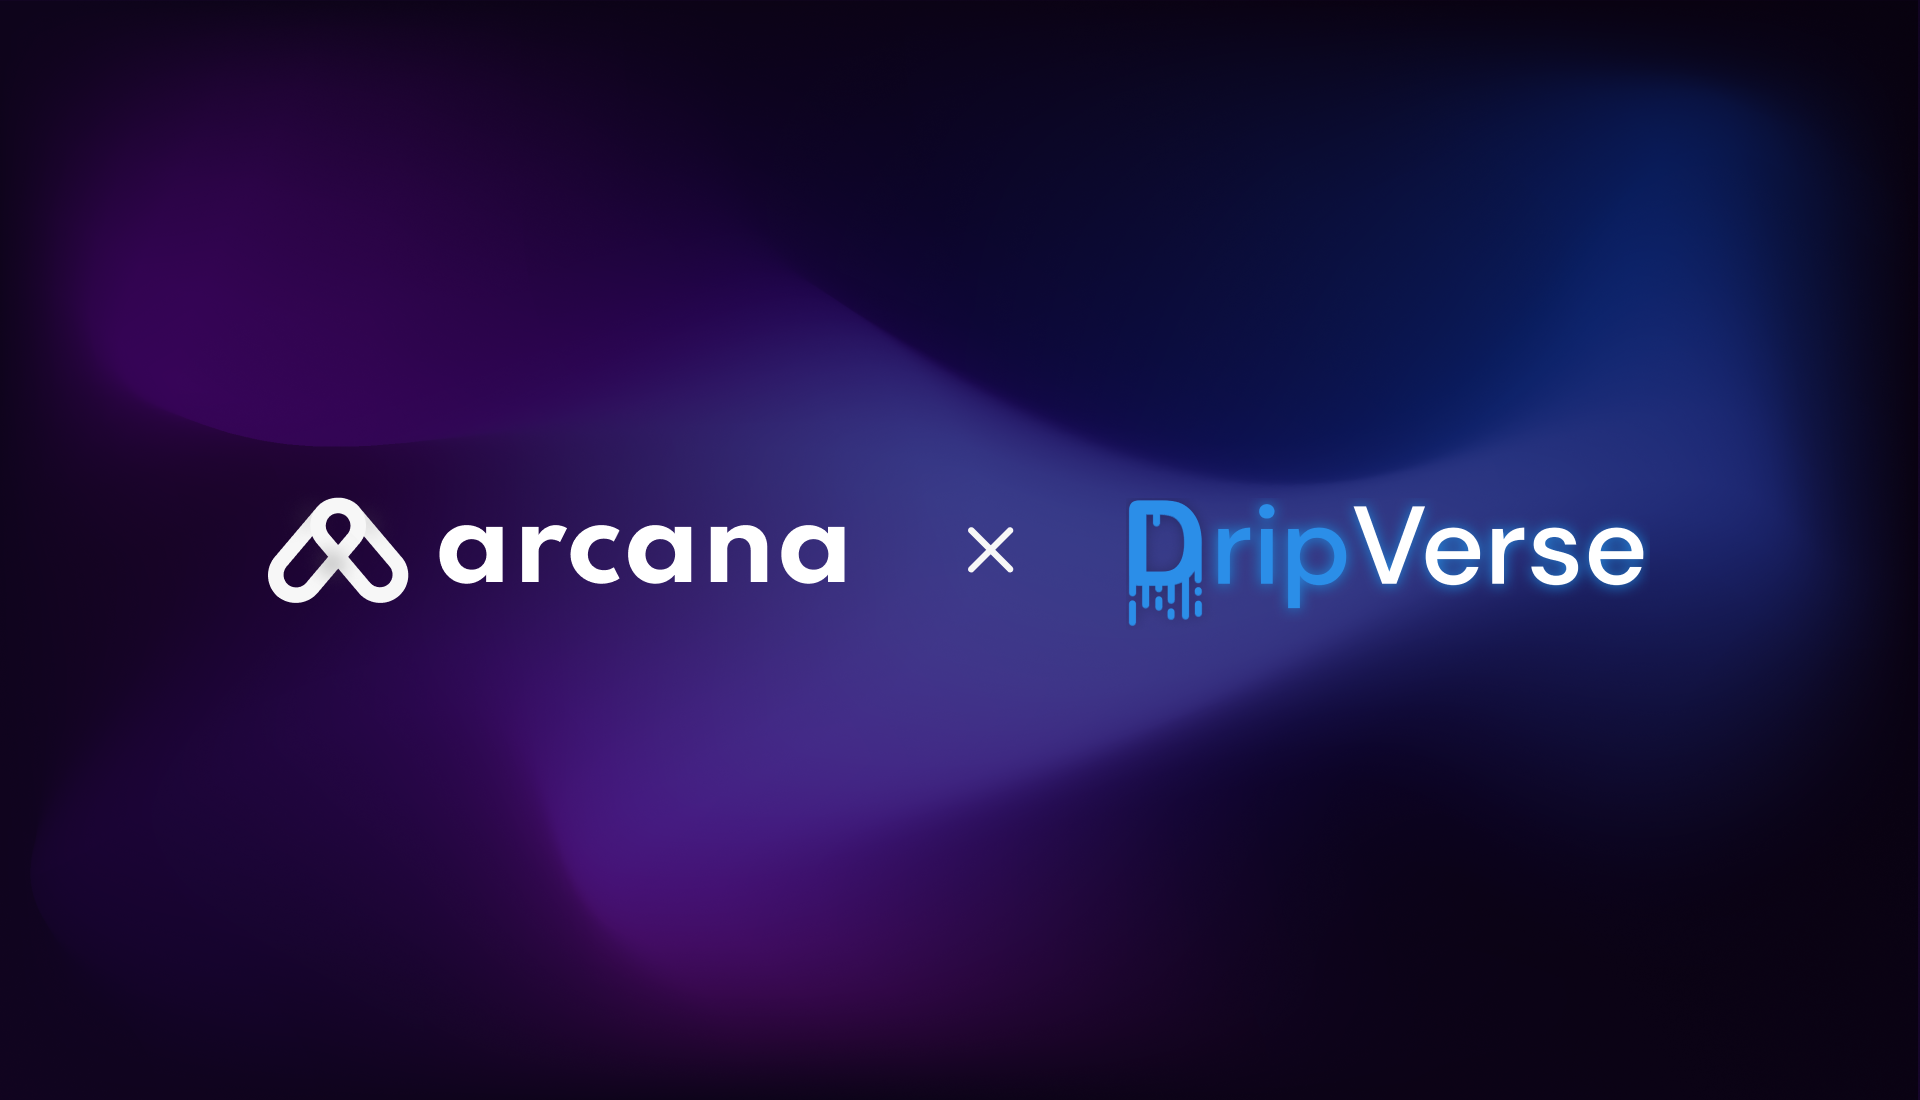 DripVerse Protocol partners with Arcana